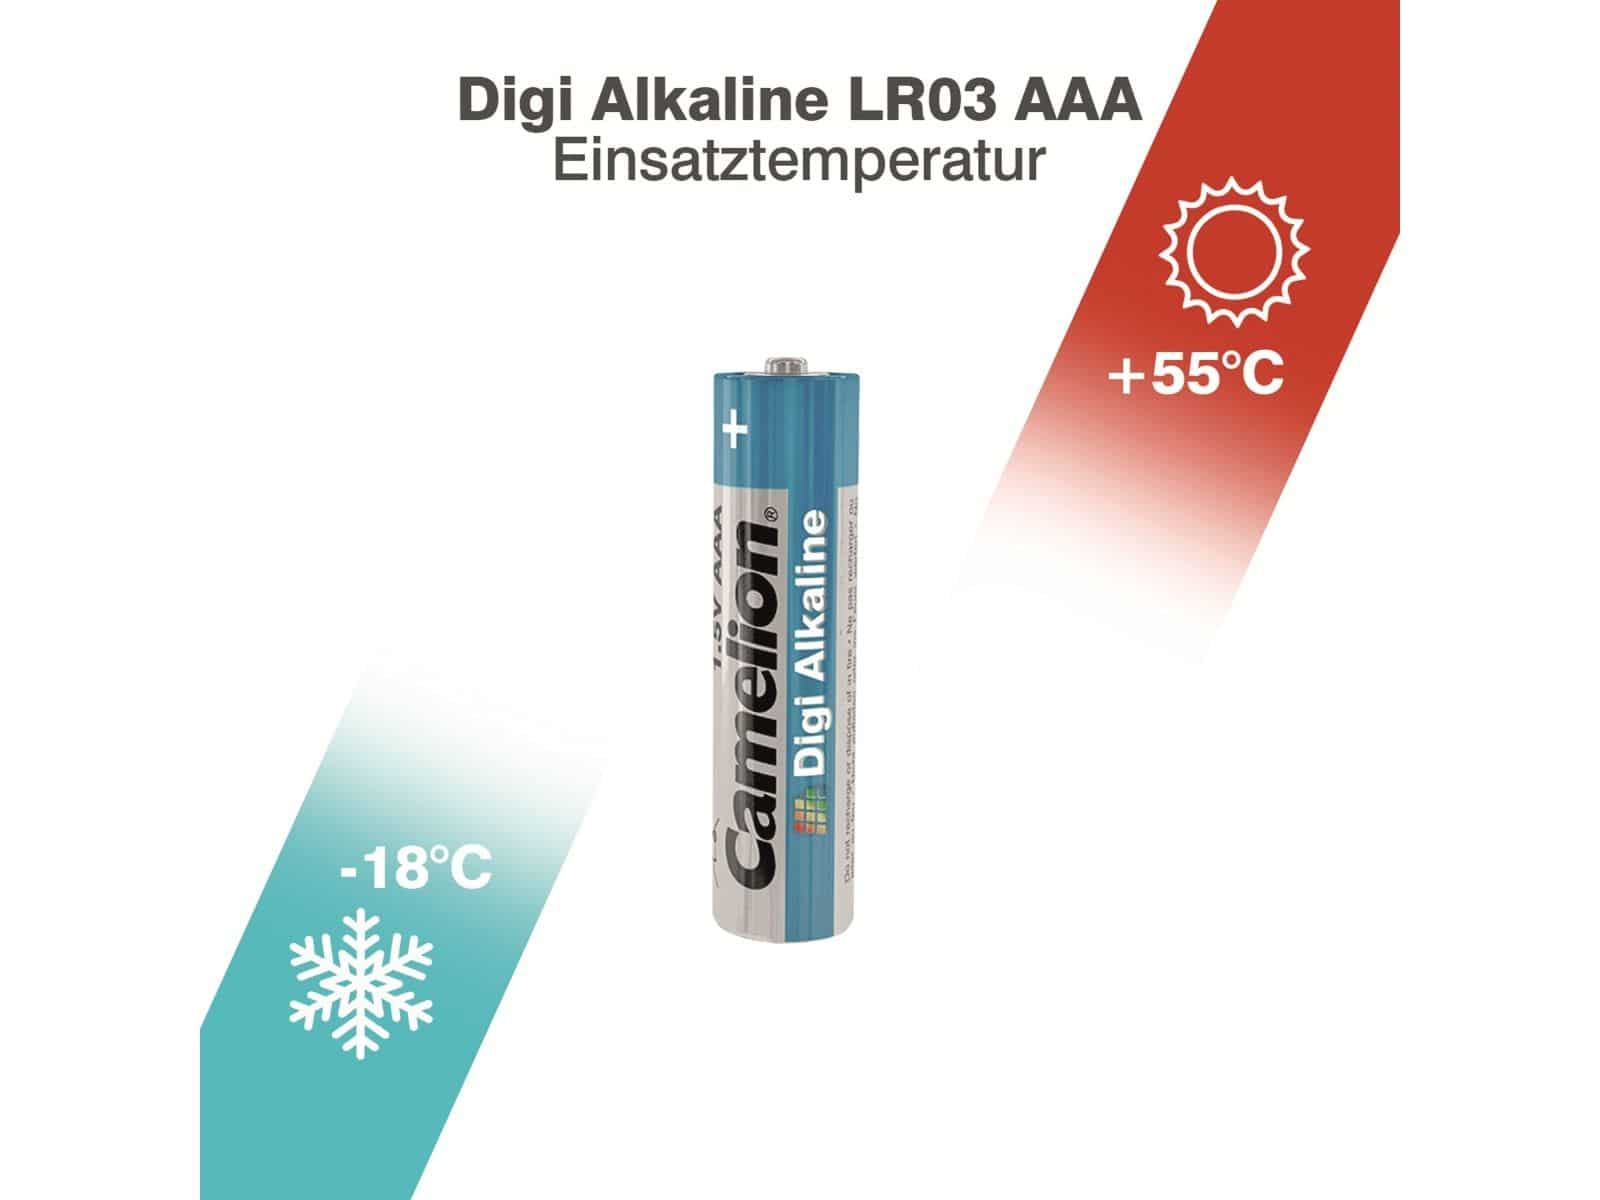 Batterie Micro-Batterie, 2 CAMELION LR03, Alkaline Stück Digi-Alkaline,